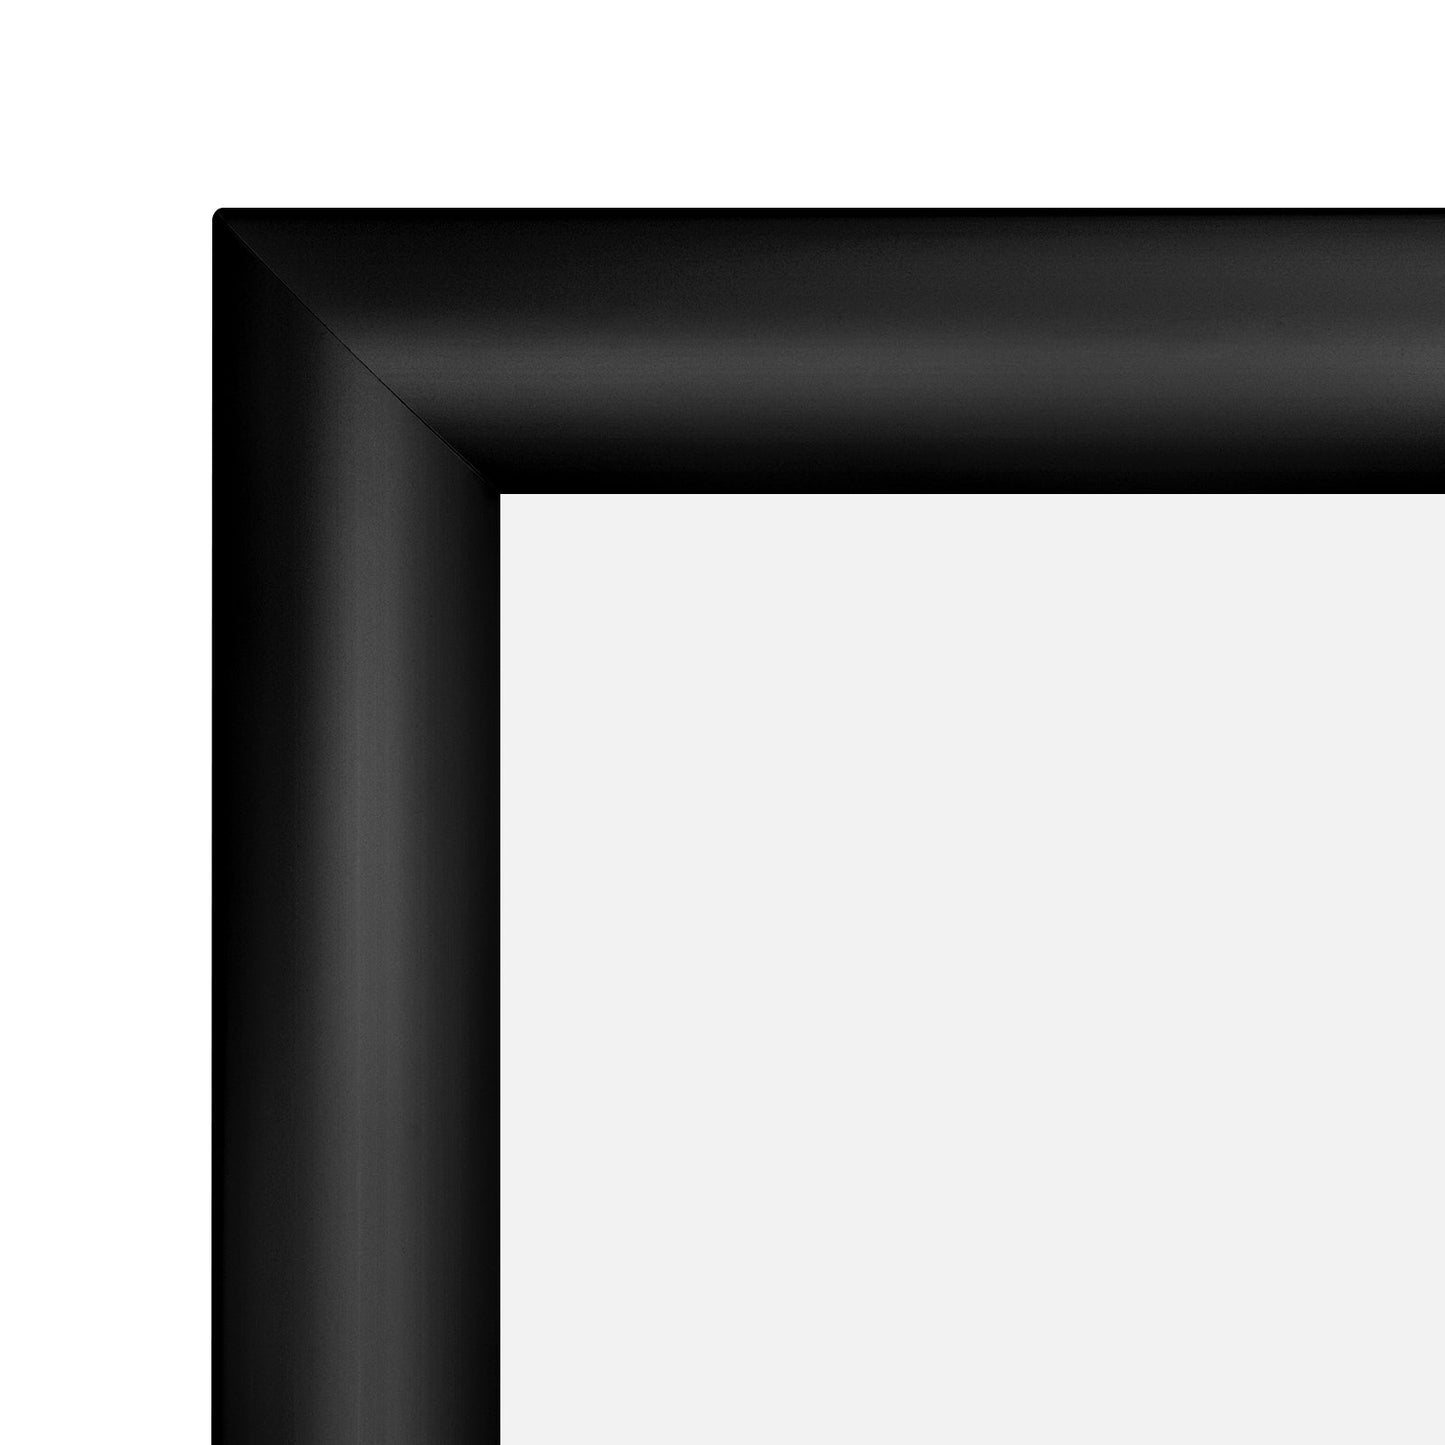 19x26 Black SnapeZo® Snap Frame - 1.2" Profile - Snap Frames Direct